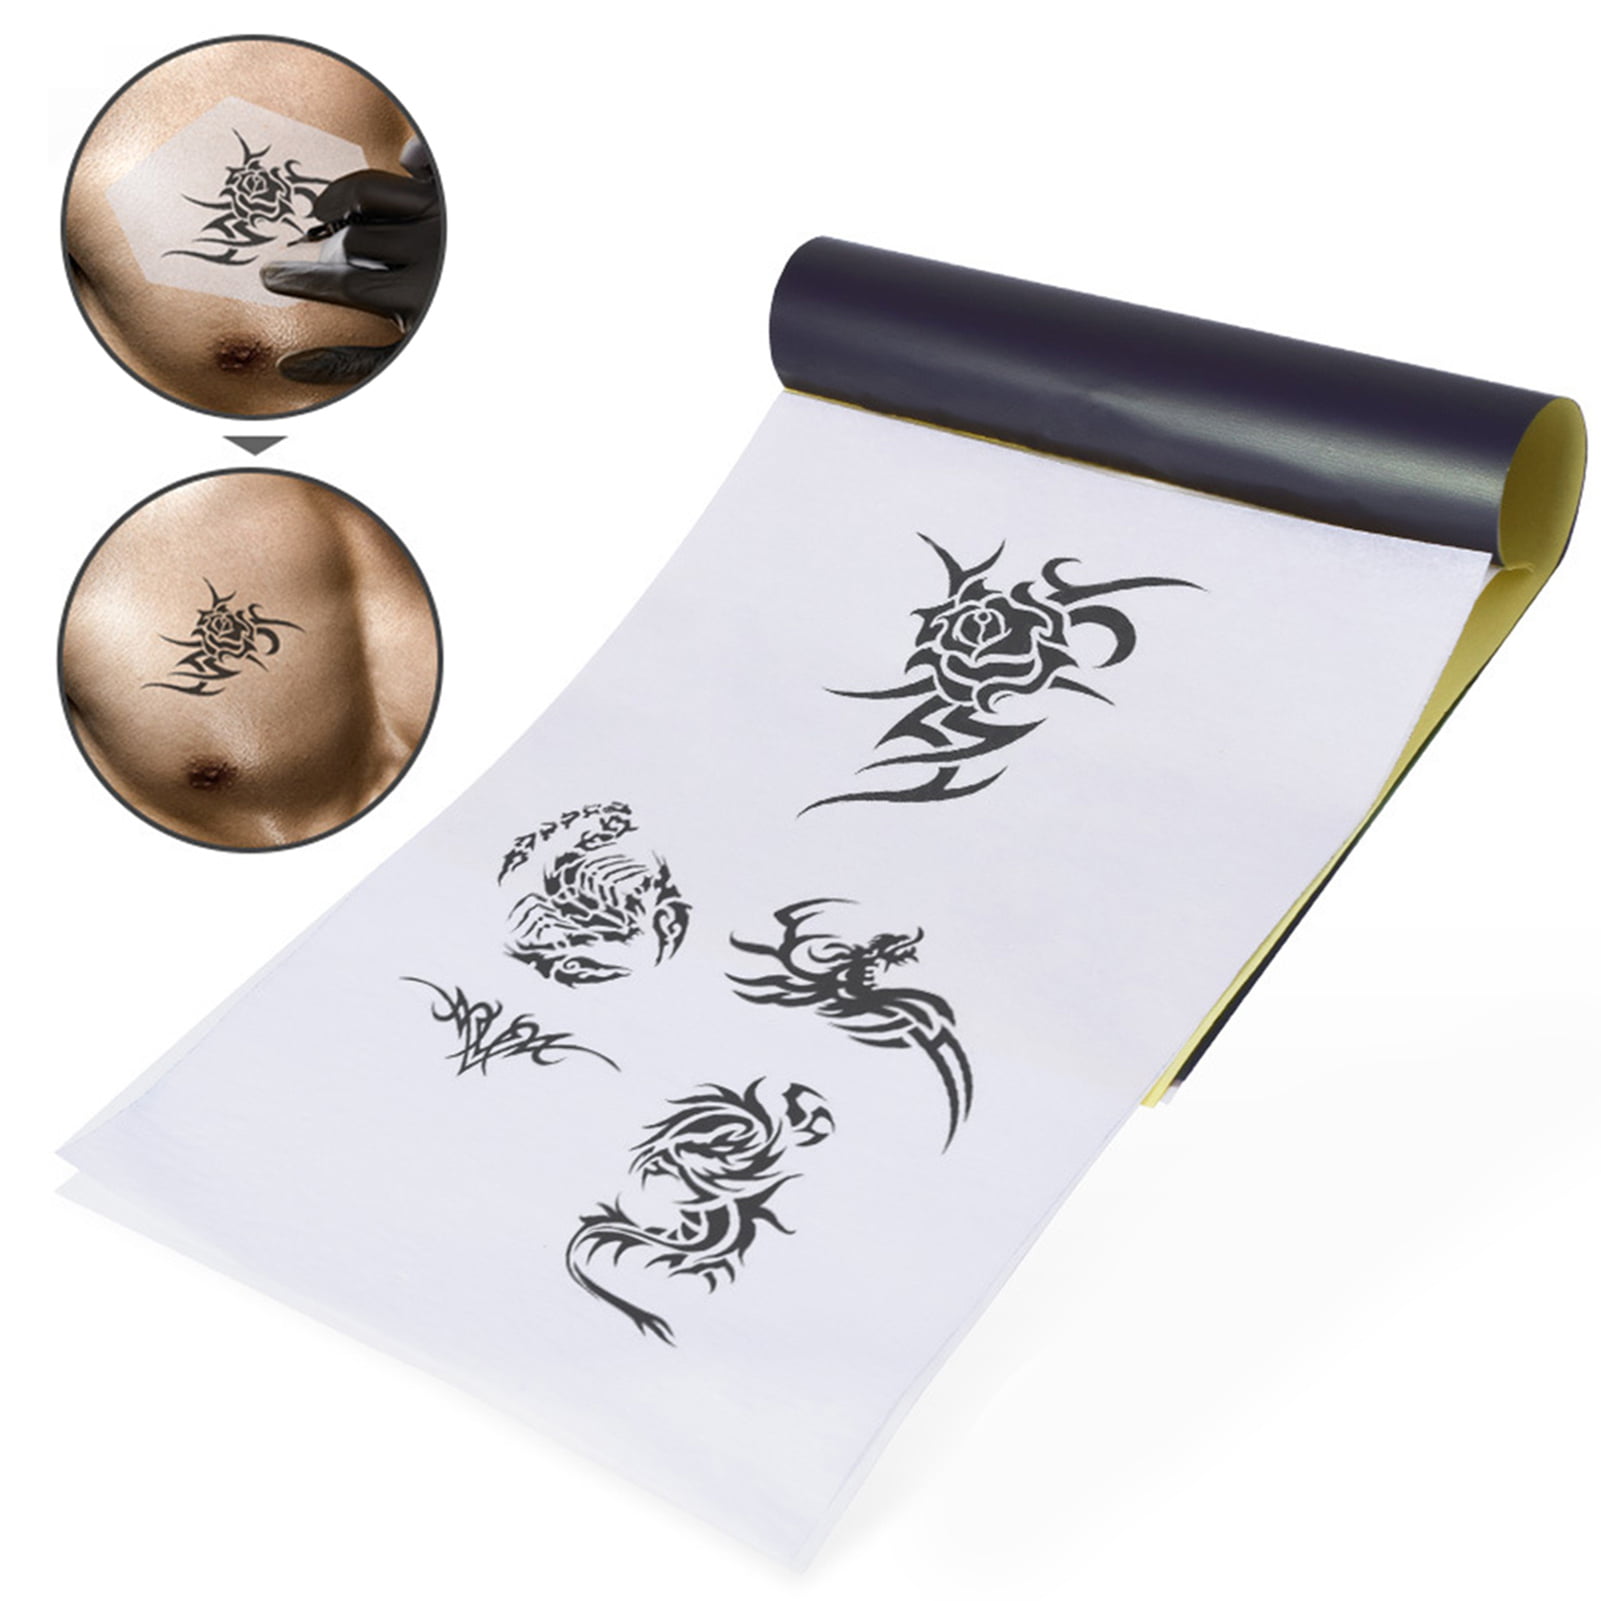 Weliu Tattoo Transfer Paper, 35 Sheets Tattoo Stencil Transfer Paper for  Tattooing